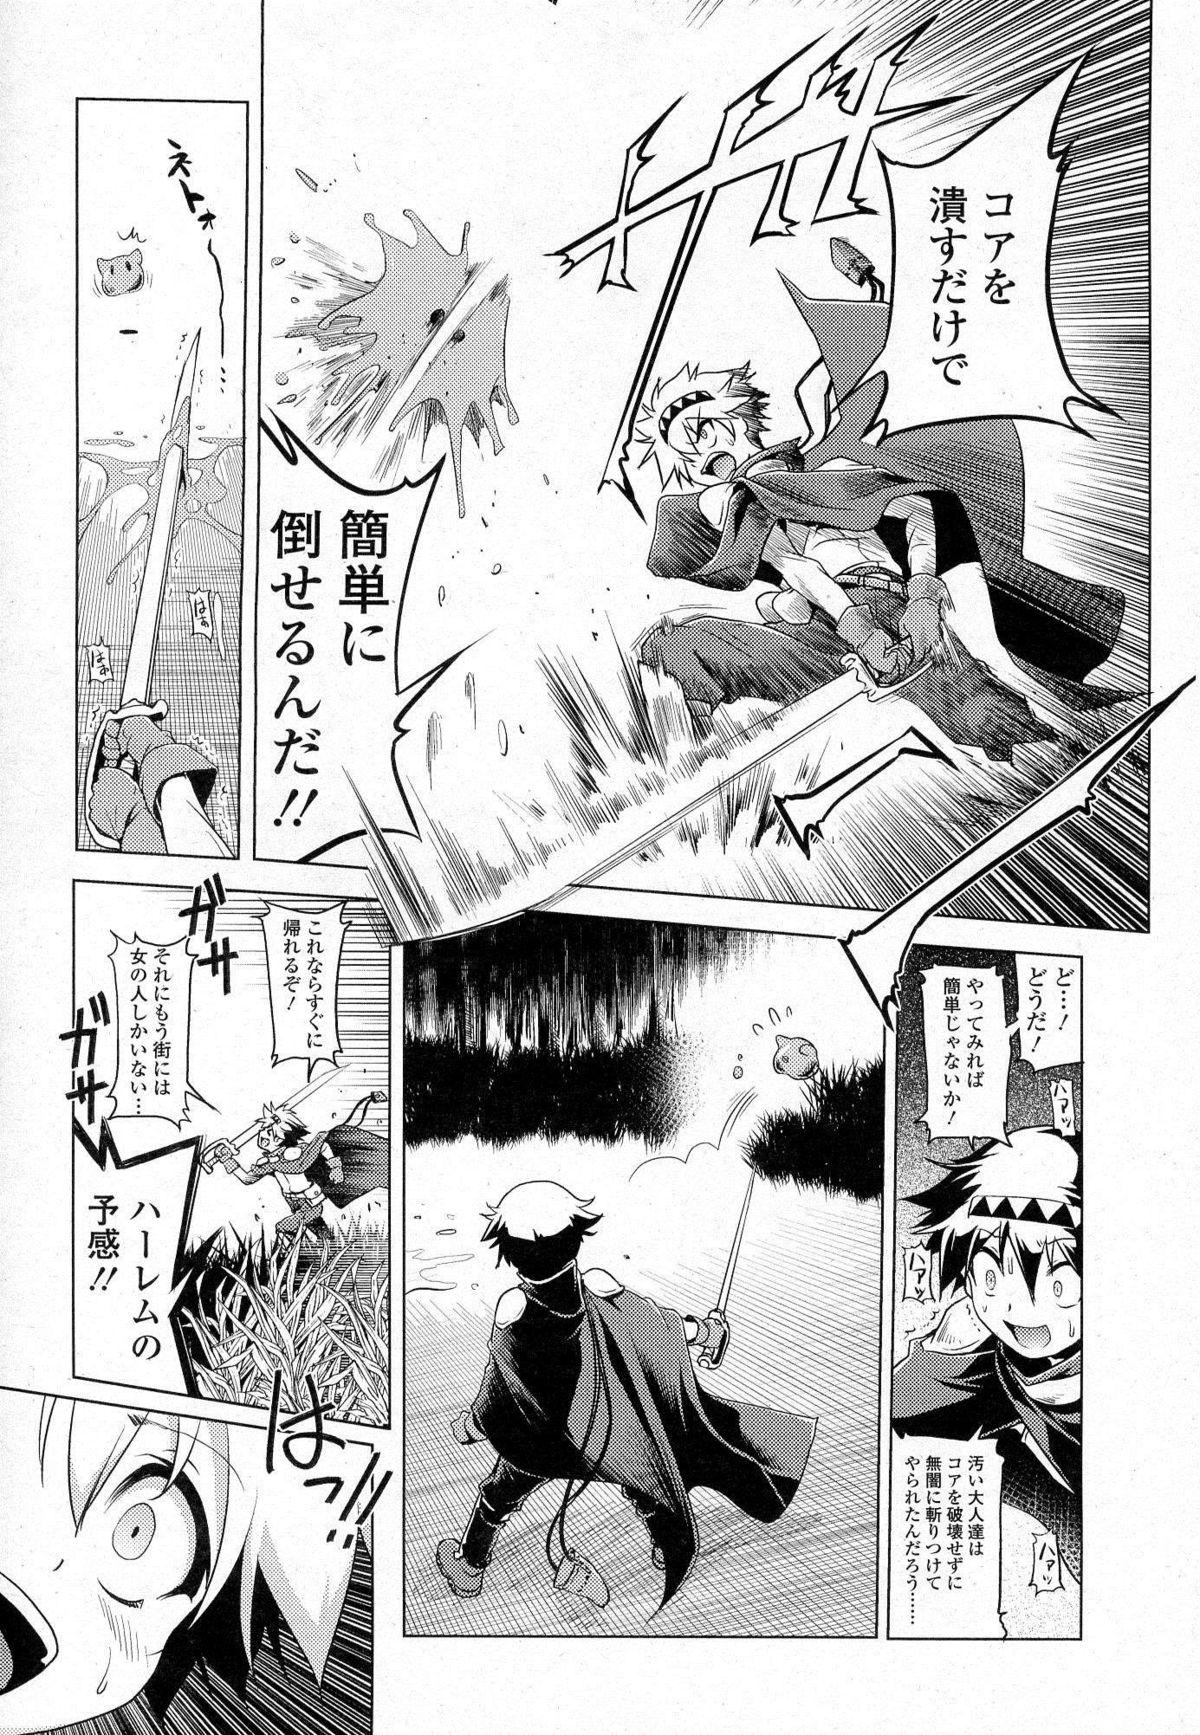 Akazawa RED (あかざわRED)スライム娘の誘惑に負けて更に犯される漫画(上) 1